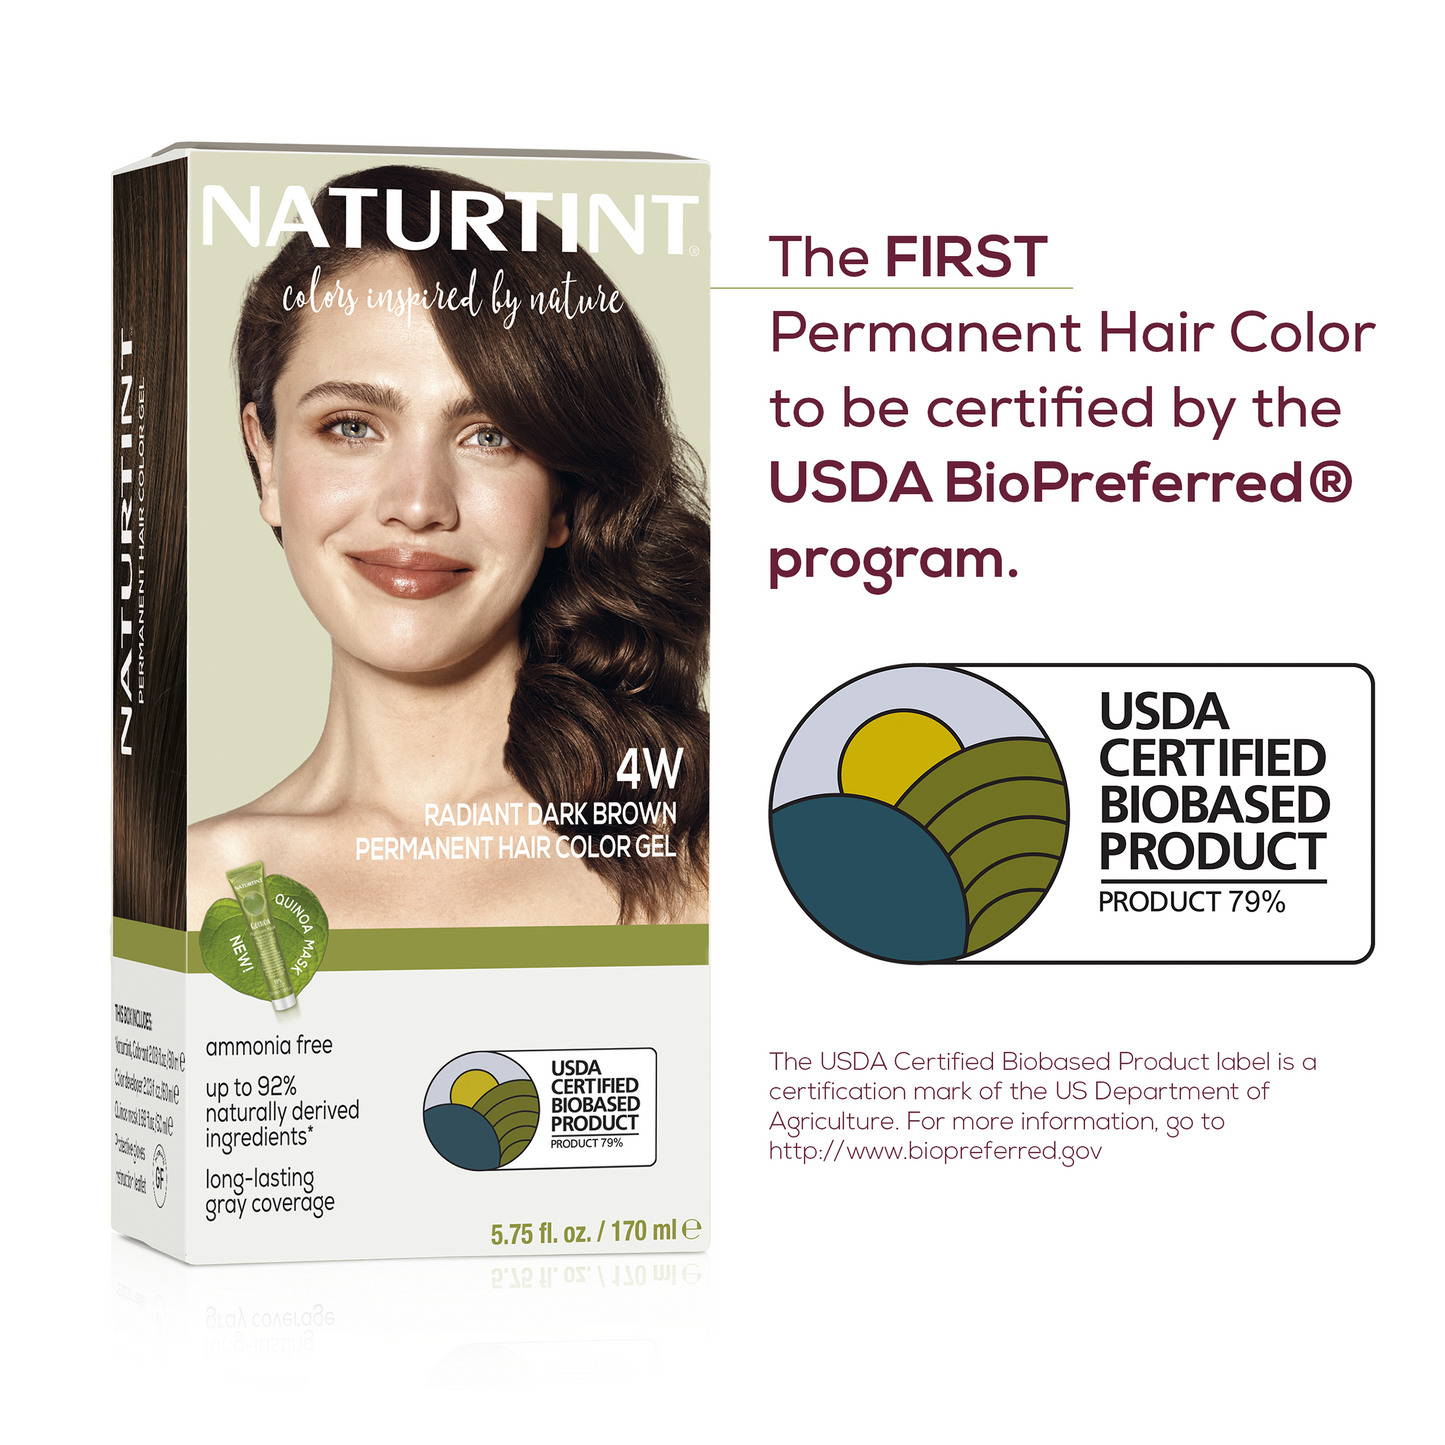 Naturtint Permanent Hair Color 4W Radiant Dark Brown